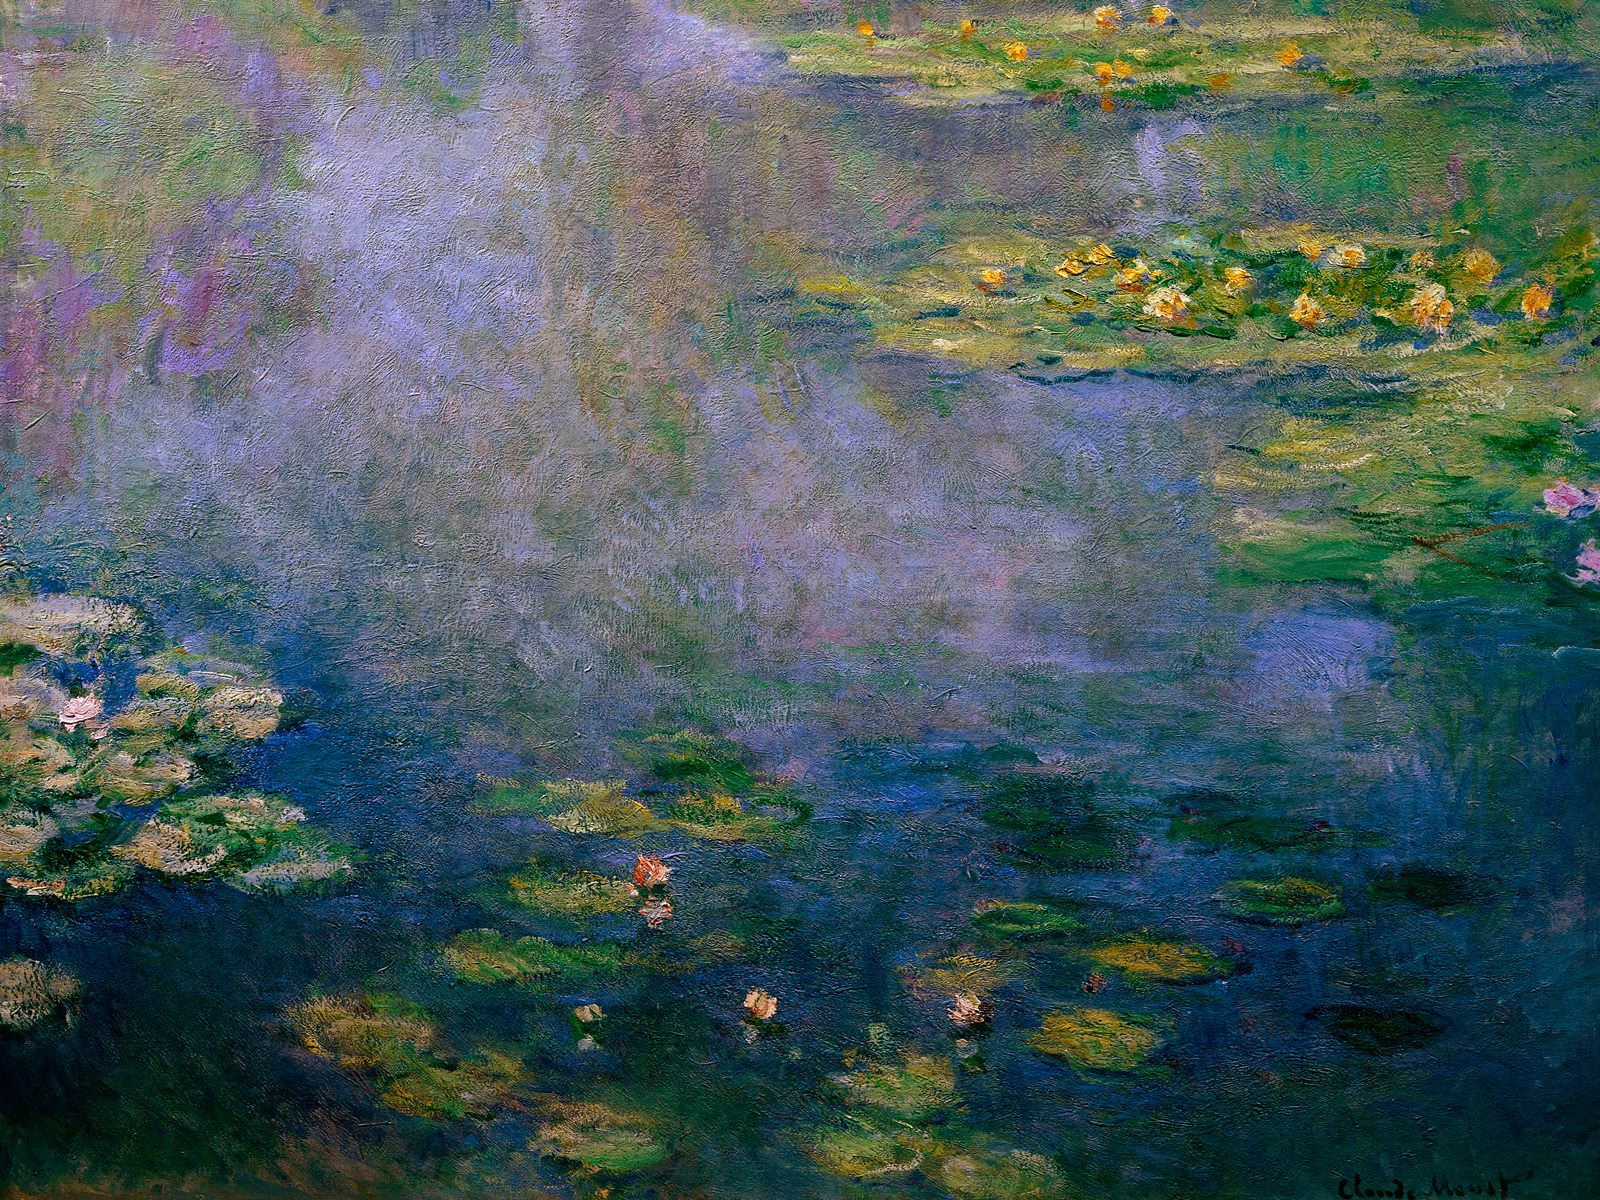 Claude+Monet-1840-1926 (1001).jpg